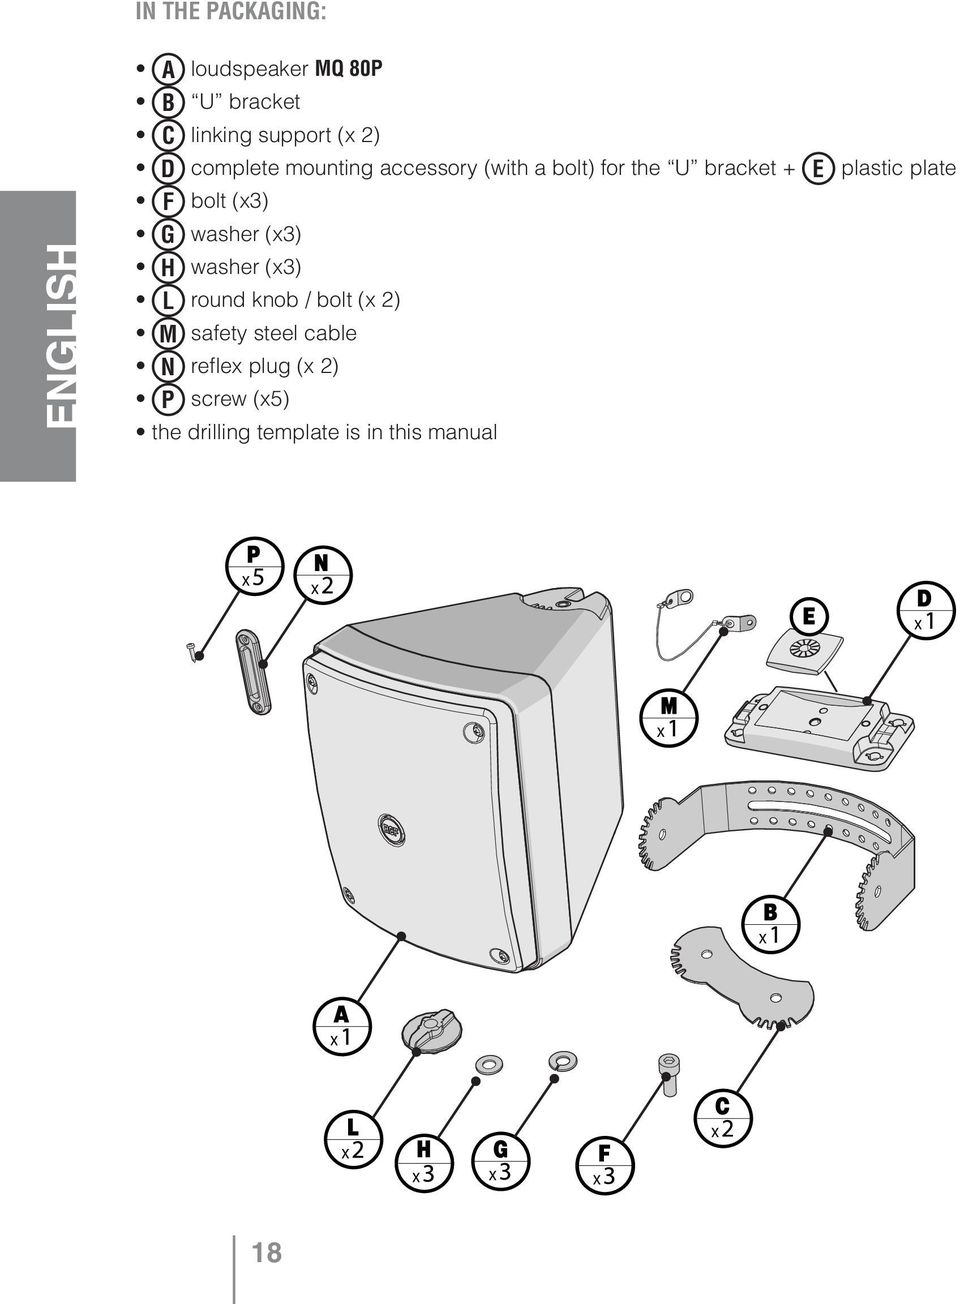 plate F bolt (x3) G washer (x3) H washer (x3) L round knob / bolt (x 2) M safety